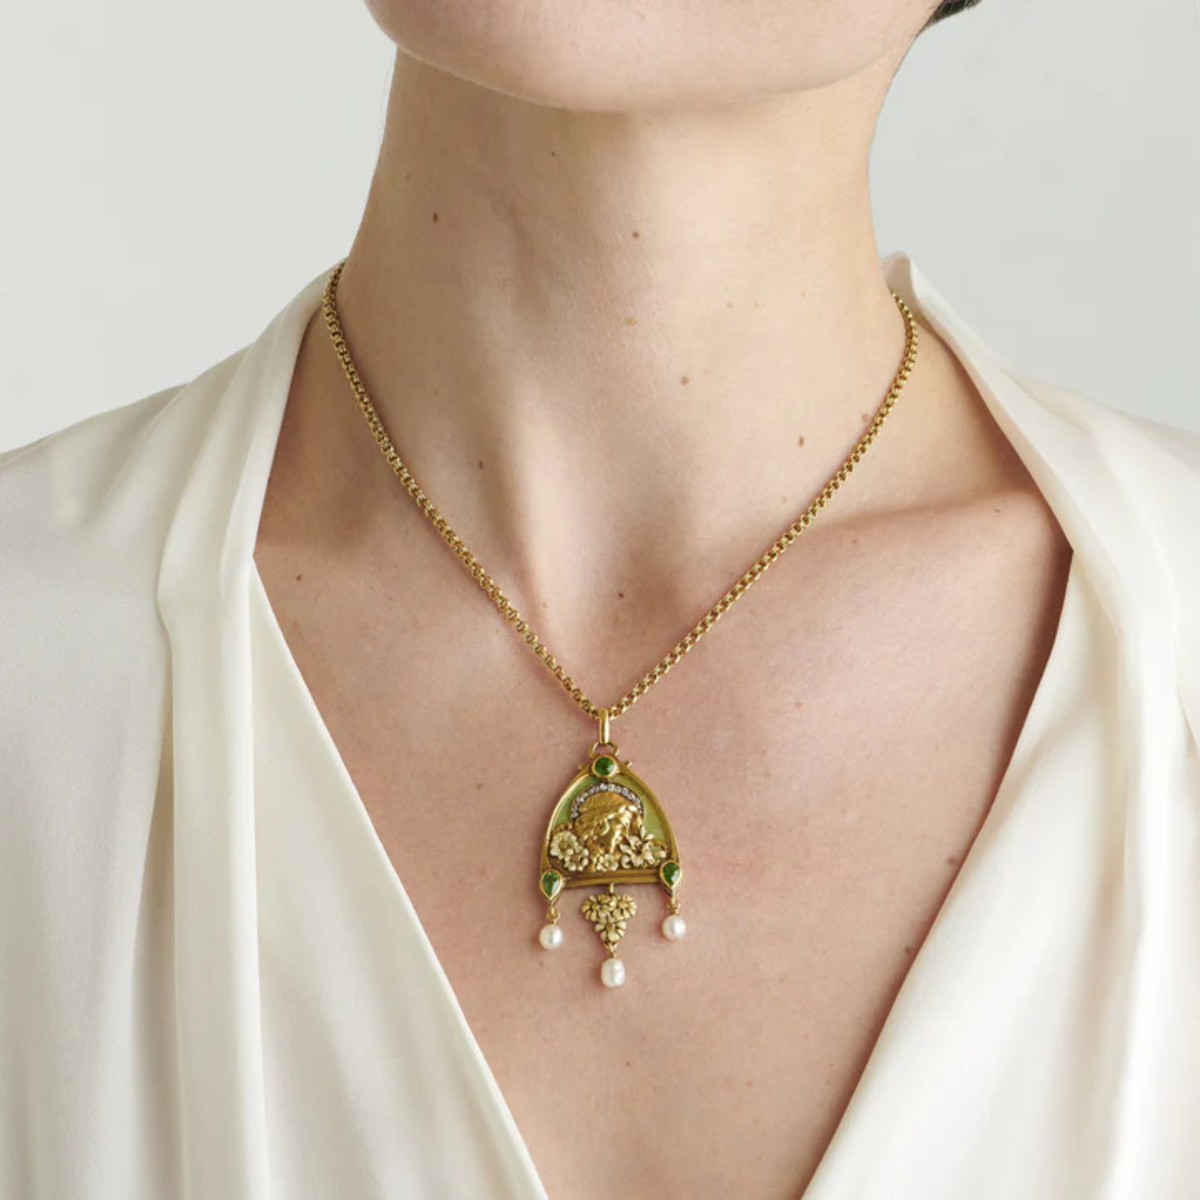 Art Nouveau 18KT Yellow Gold Diamond, Enamel, Natural Pearl & Peridot Necklace worn on neck